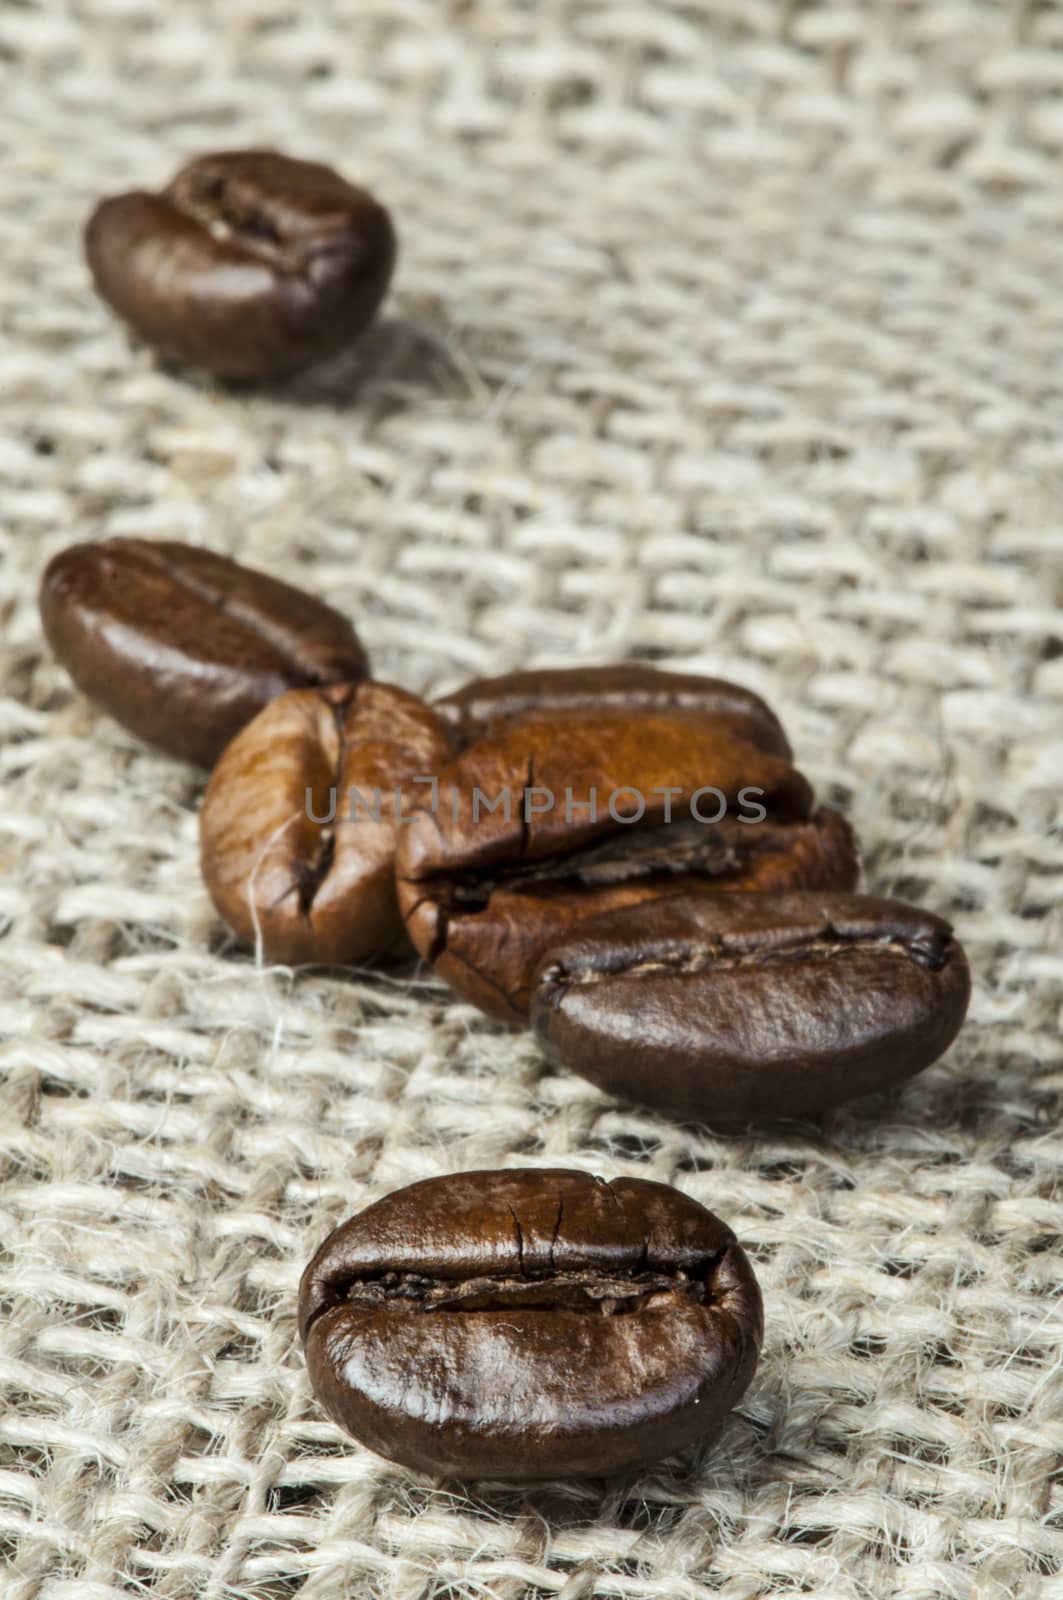 Coffee beans closeup on burlap